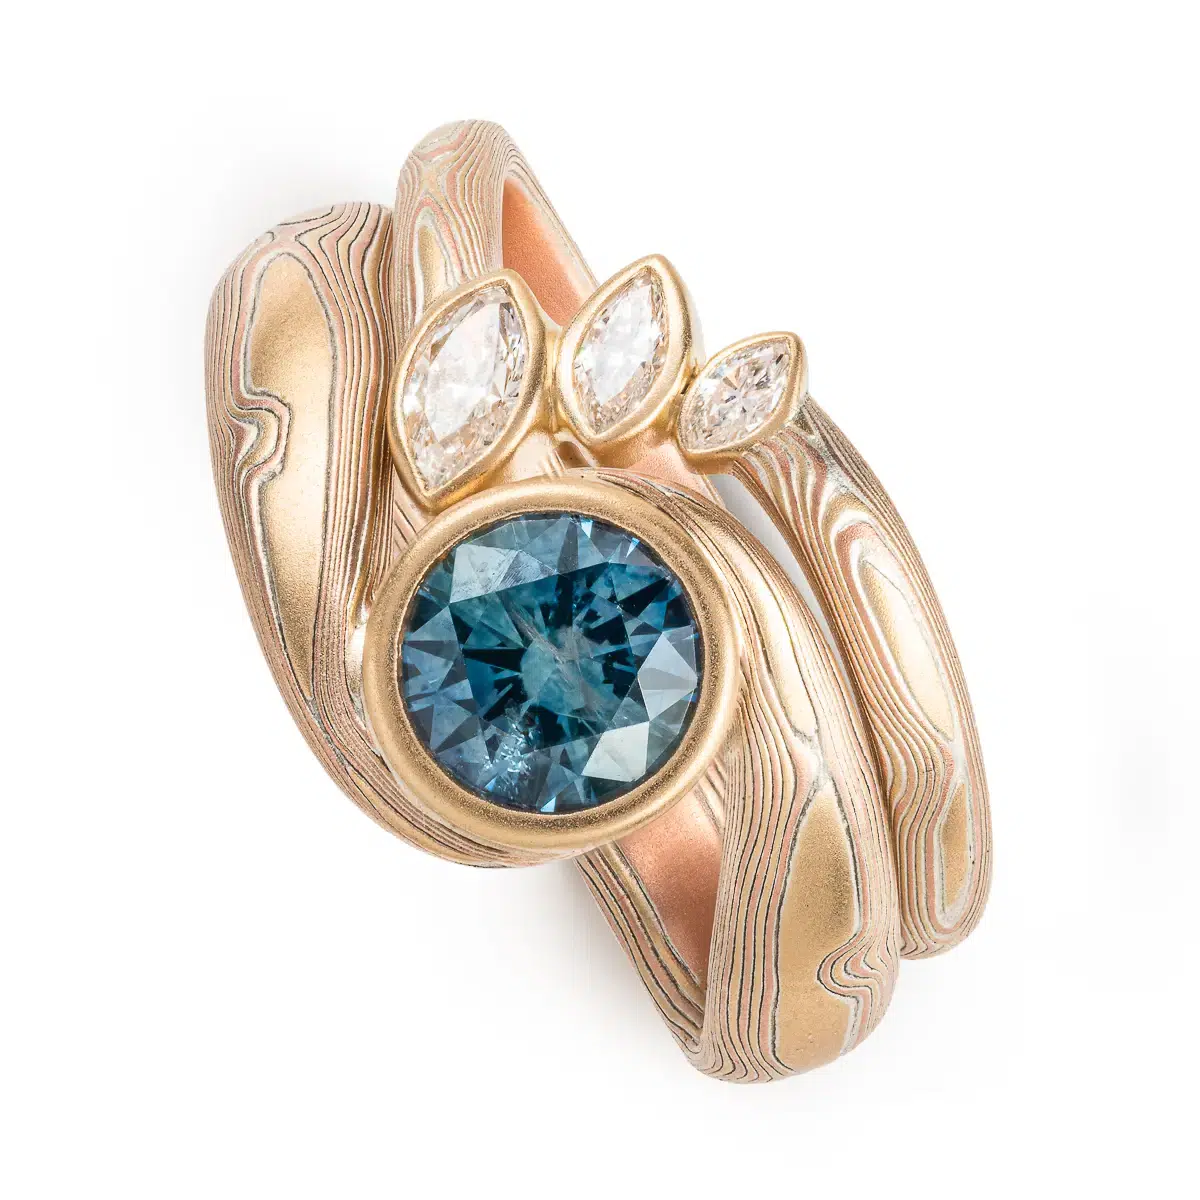 Botanic Mokume Gane Ring Set in Woodgrain Pattern with Sapphire and Diamonds